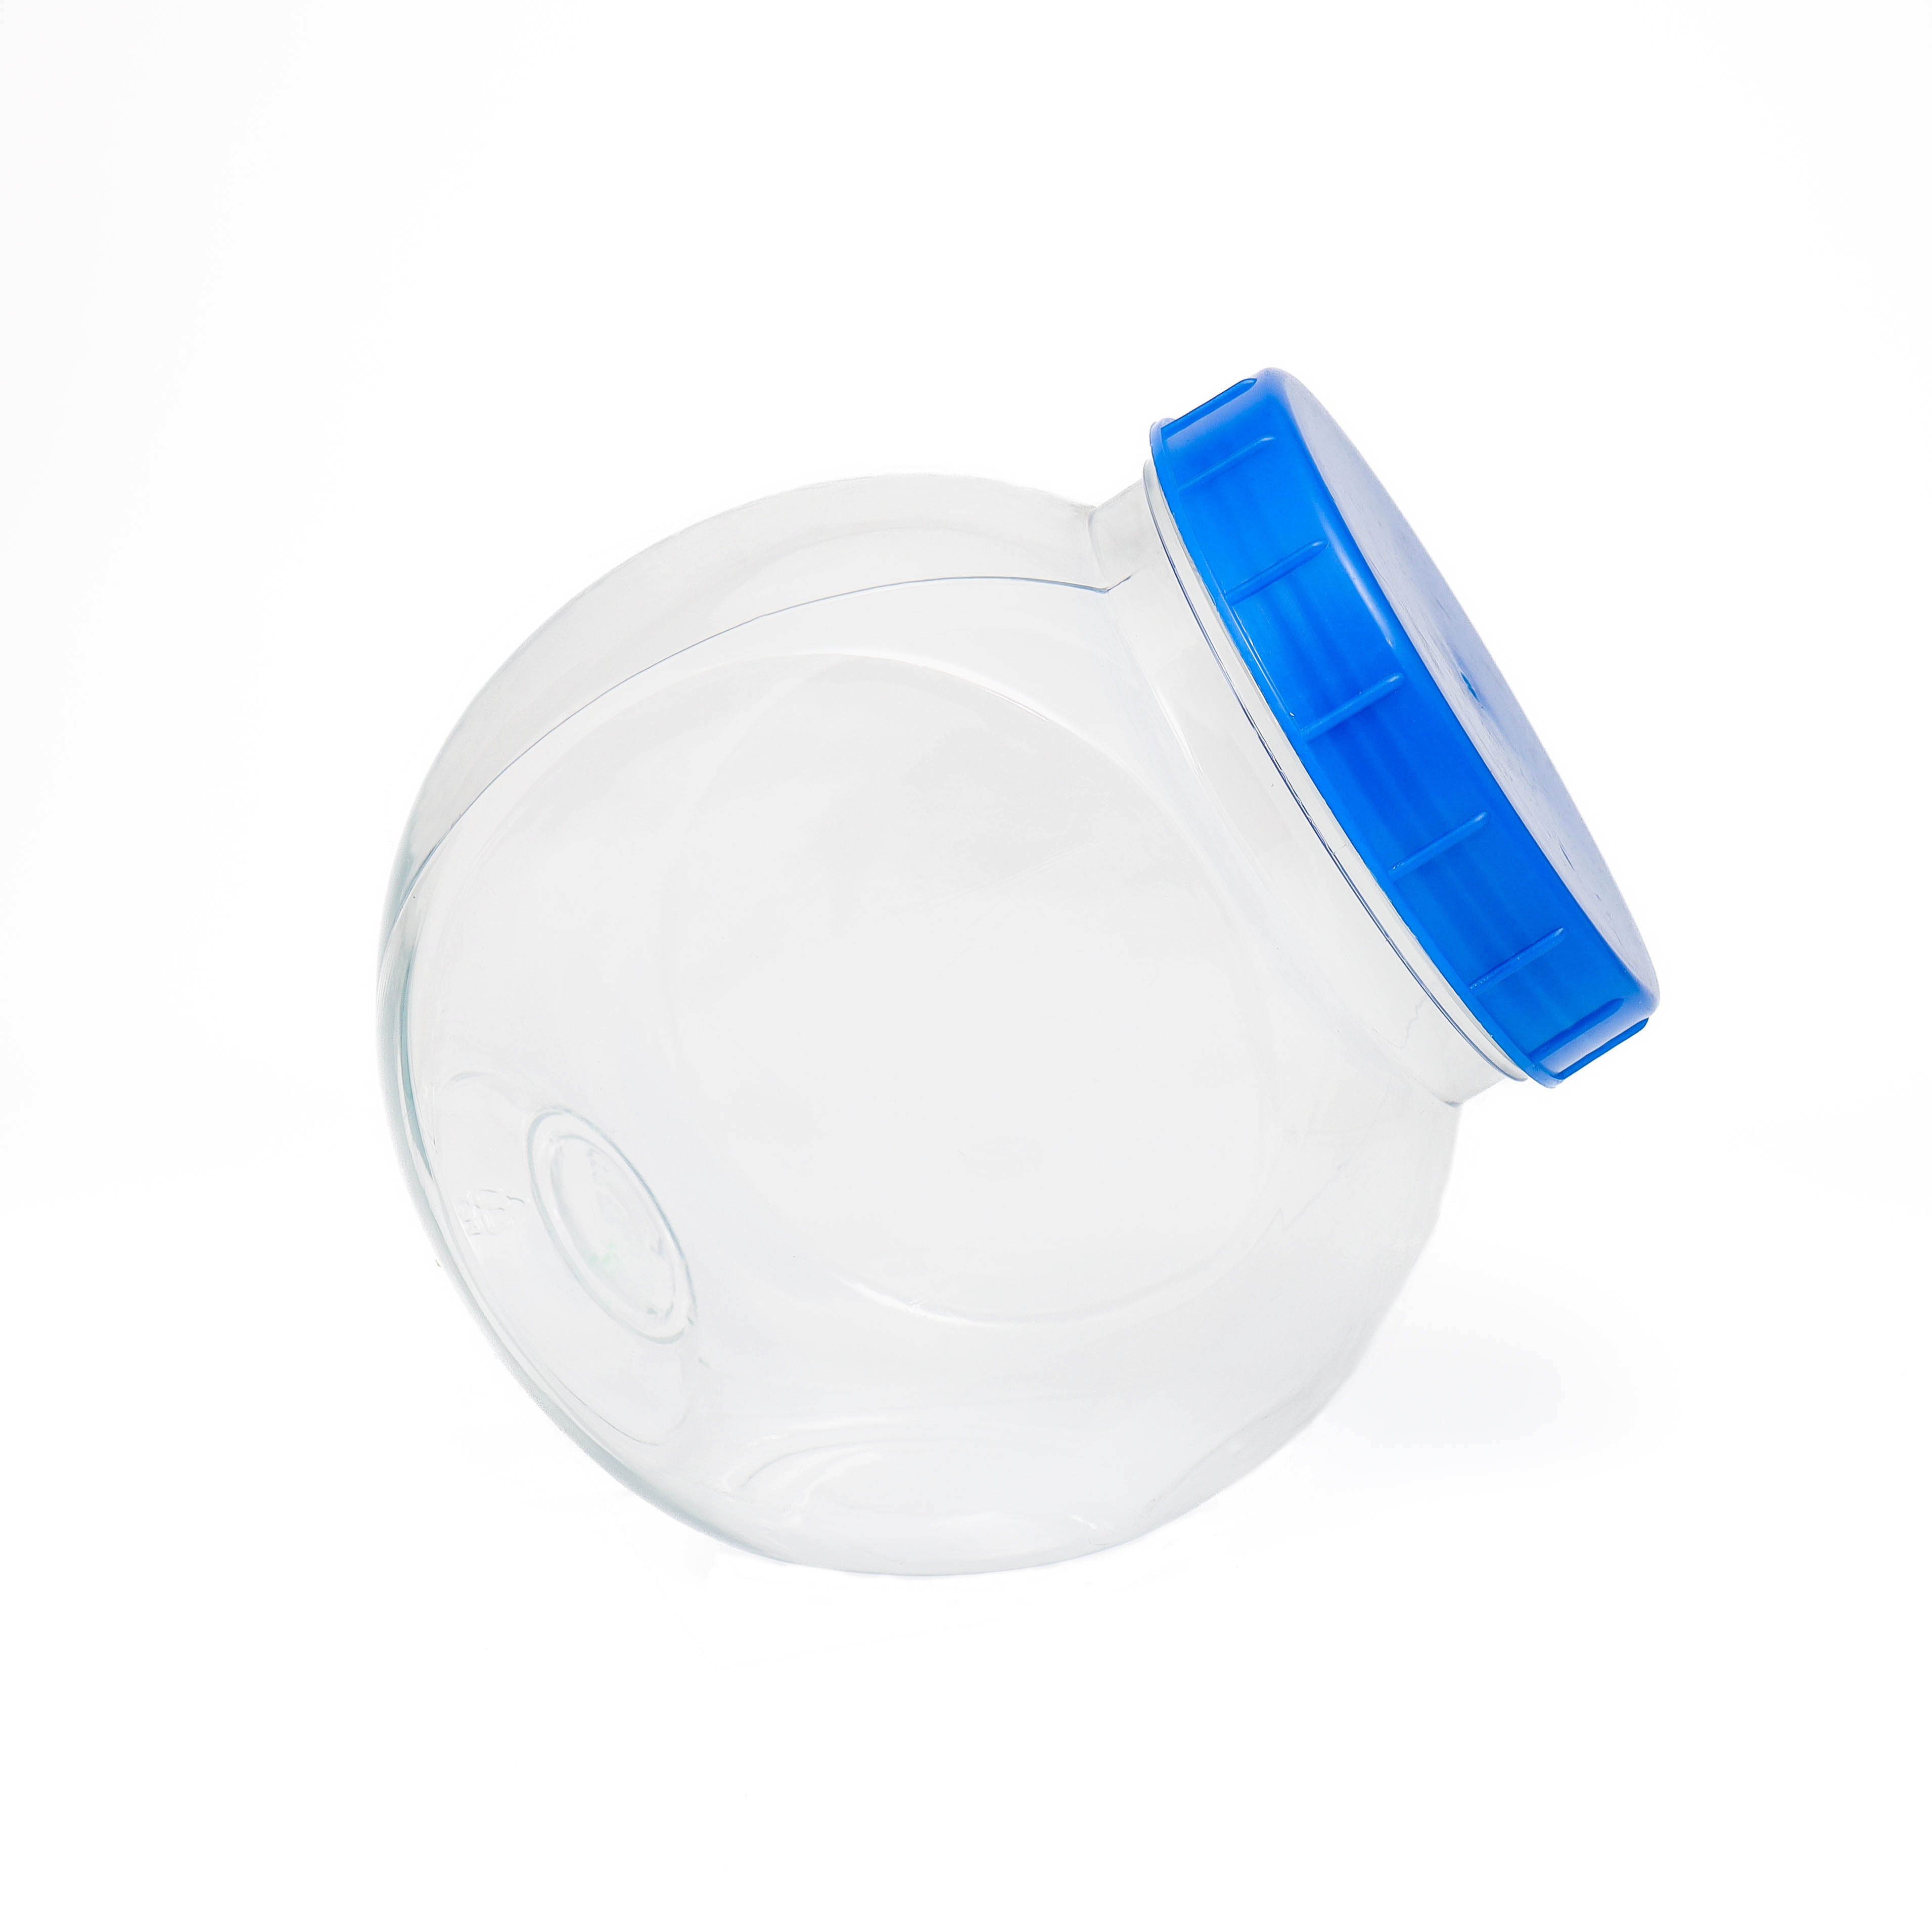 2kg Plastic Storage Jar Round Clear 2L